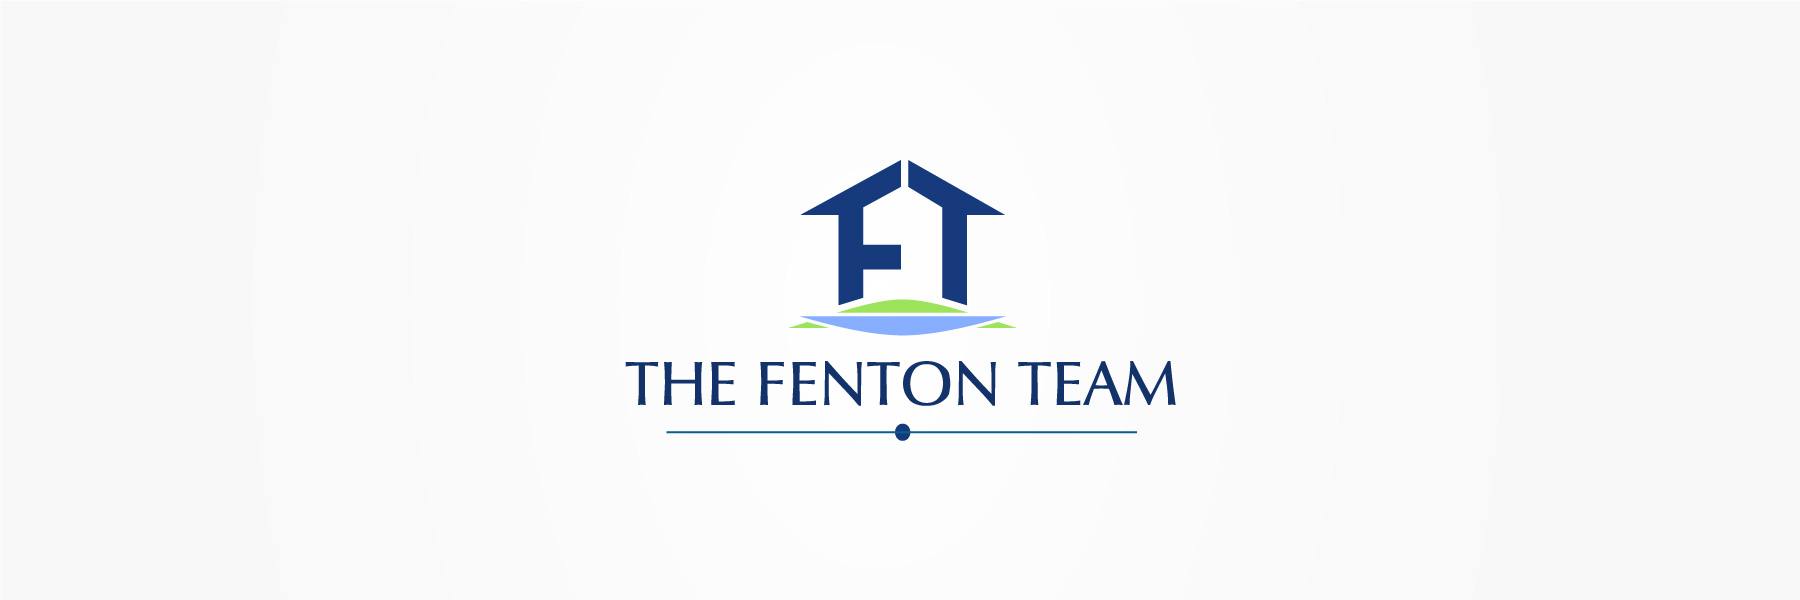 The-Fenton-Team-Logo-design